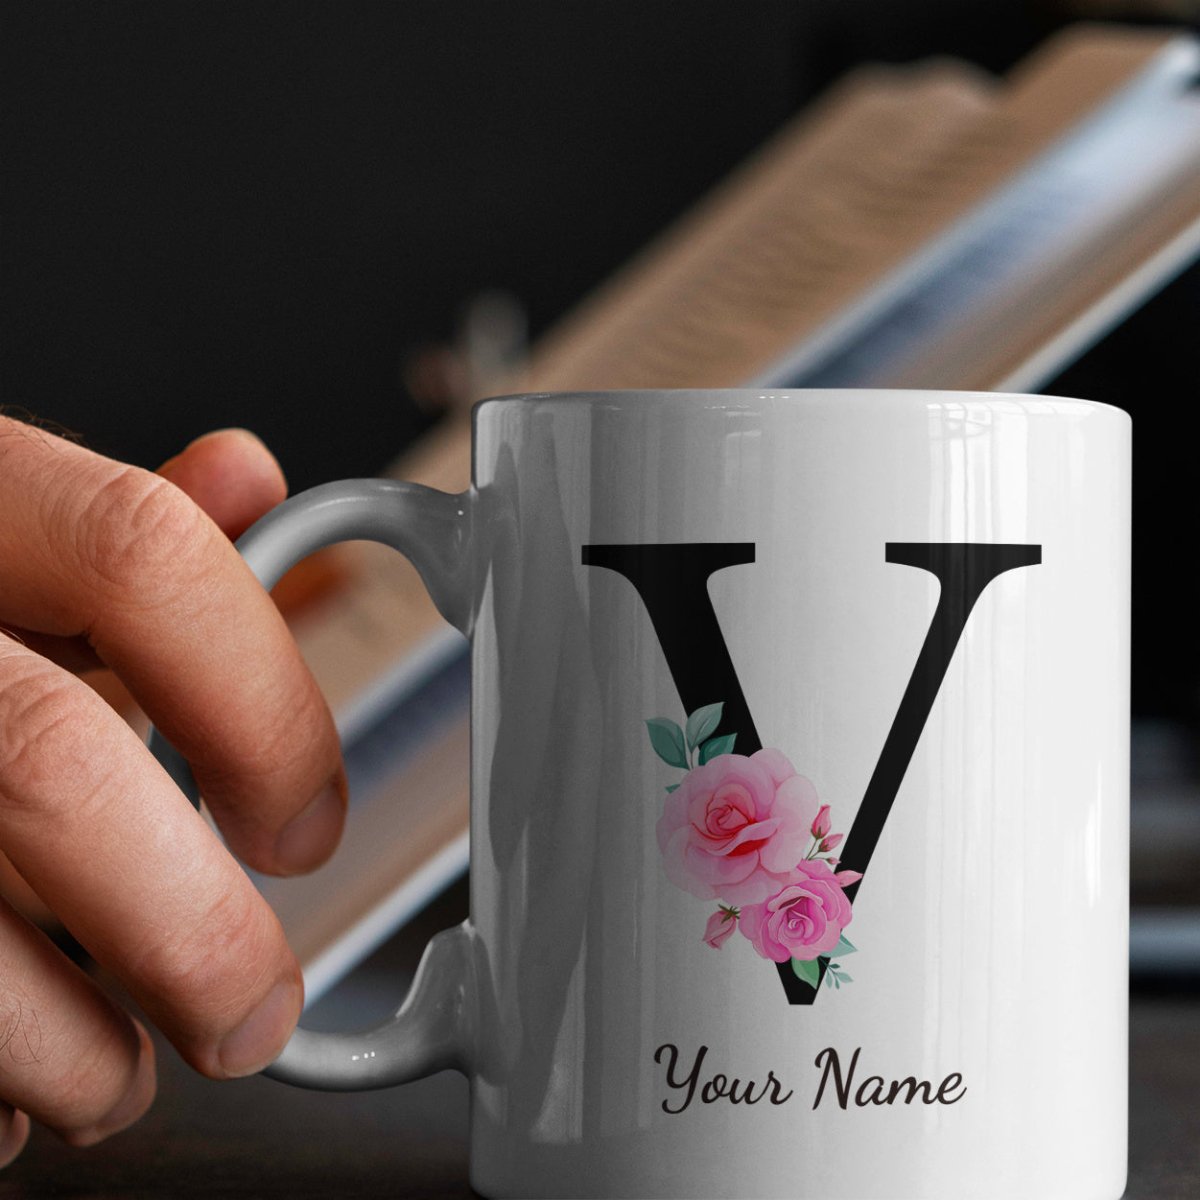 Customized Coffee Mug With Personalized Text-11 oz - Camo Coffee Company